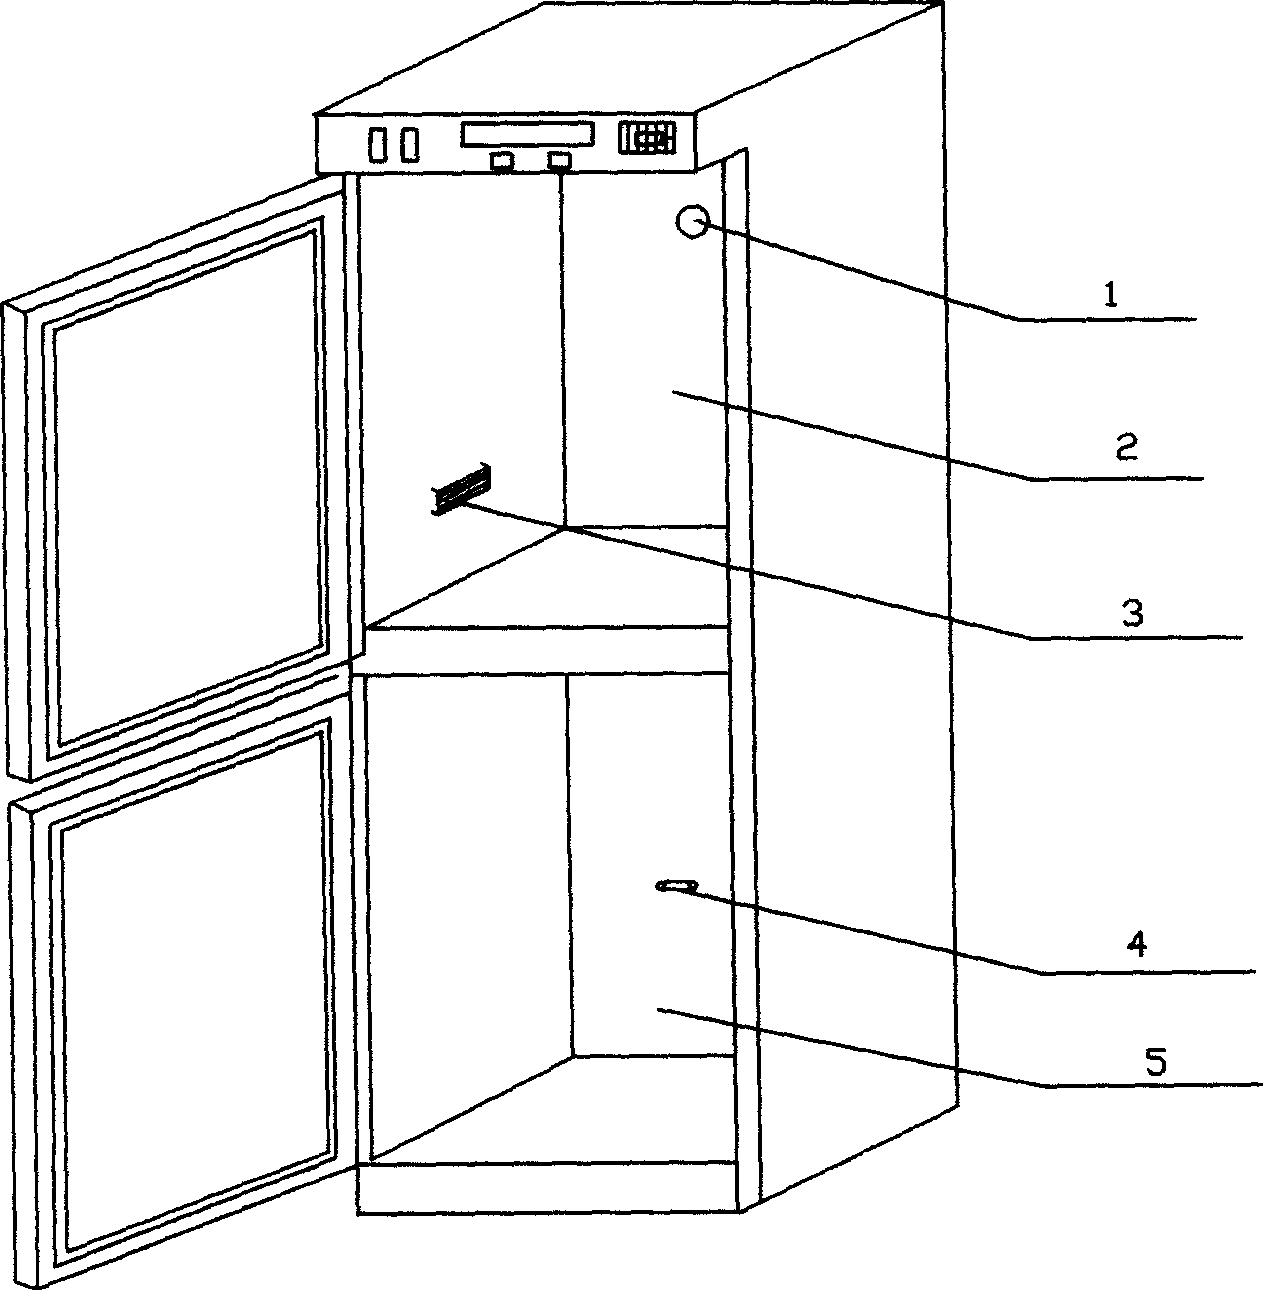 Automatic qick-freeze refrigerator and its control method